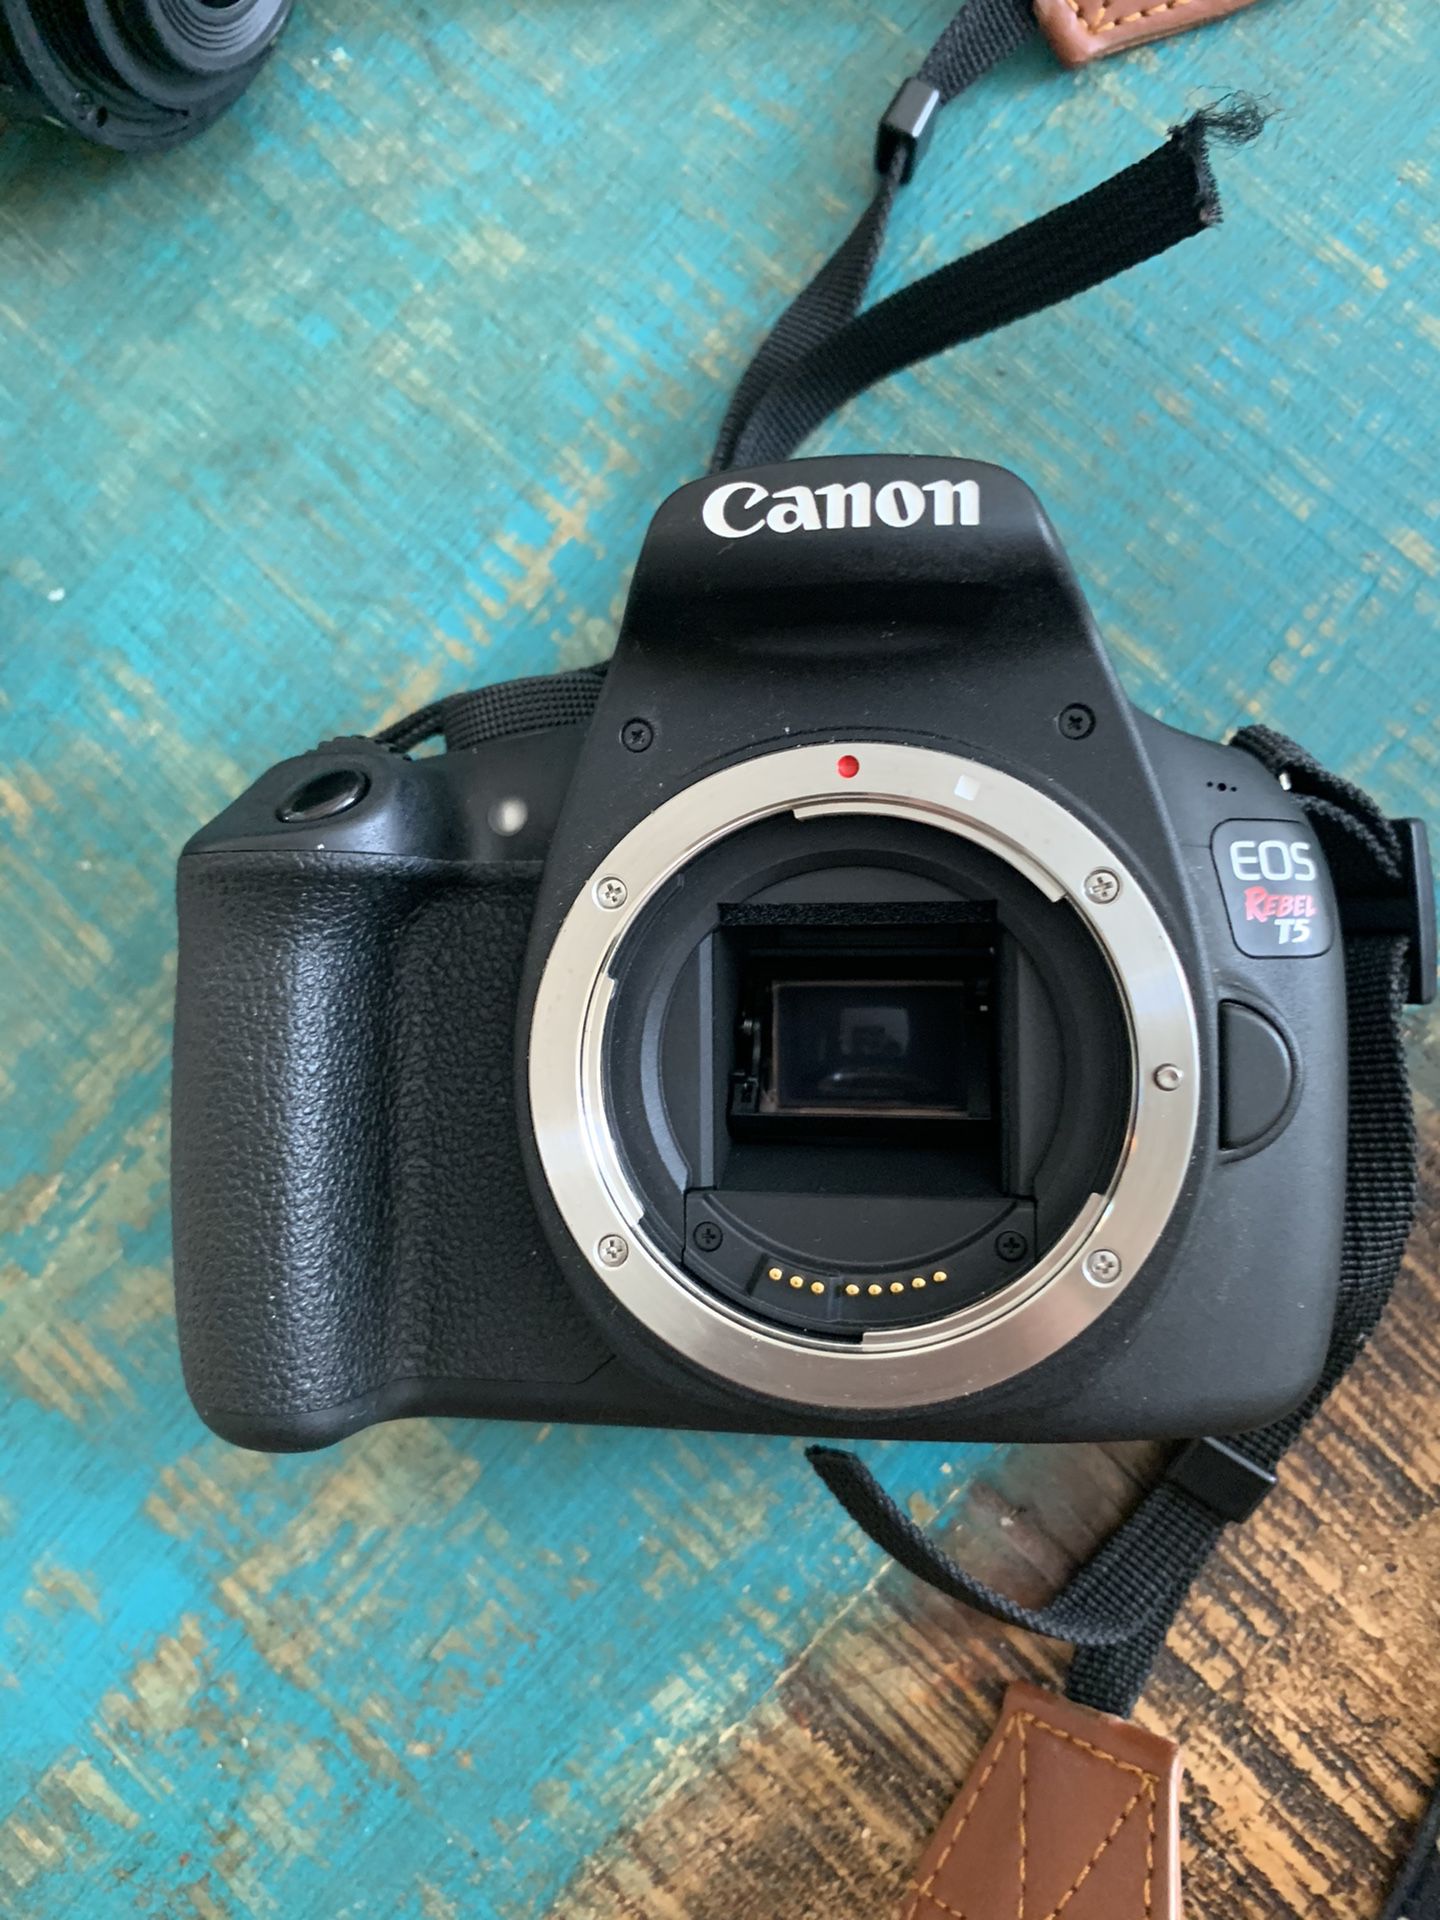 Canon rebel T5 digital slr camera